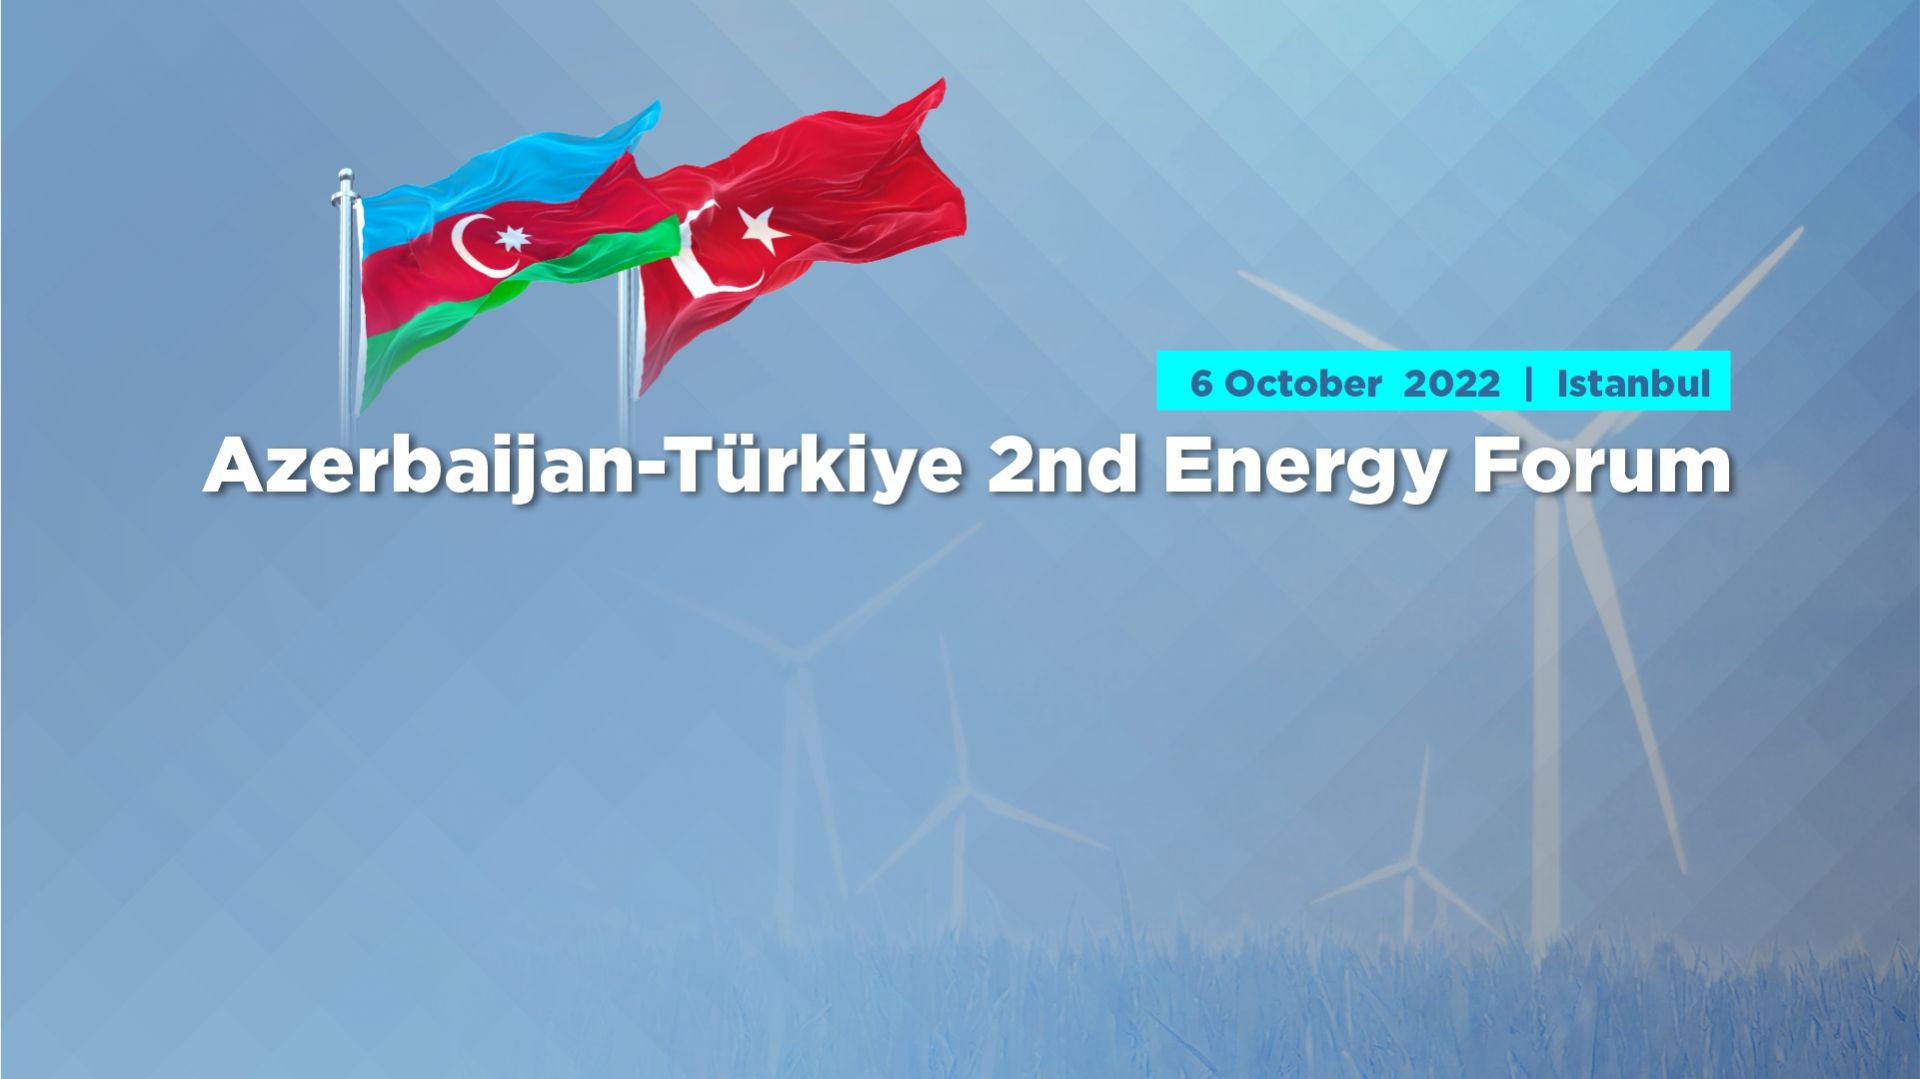 Istanbul to host 2nd Azerbaijan-Turkiye Energy Forum